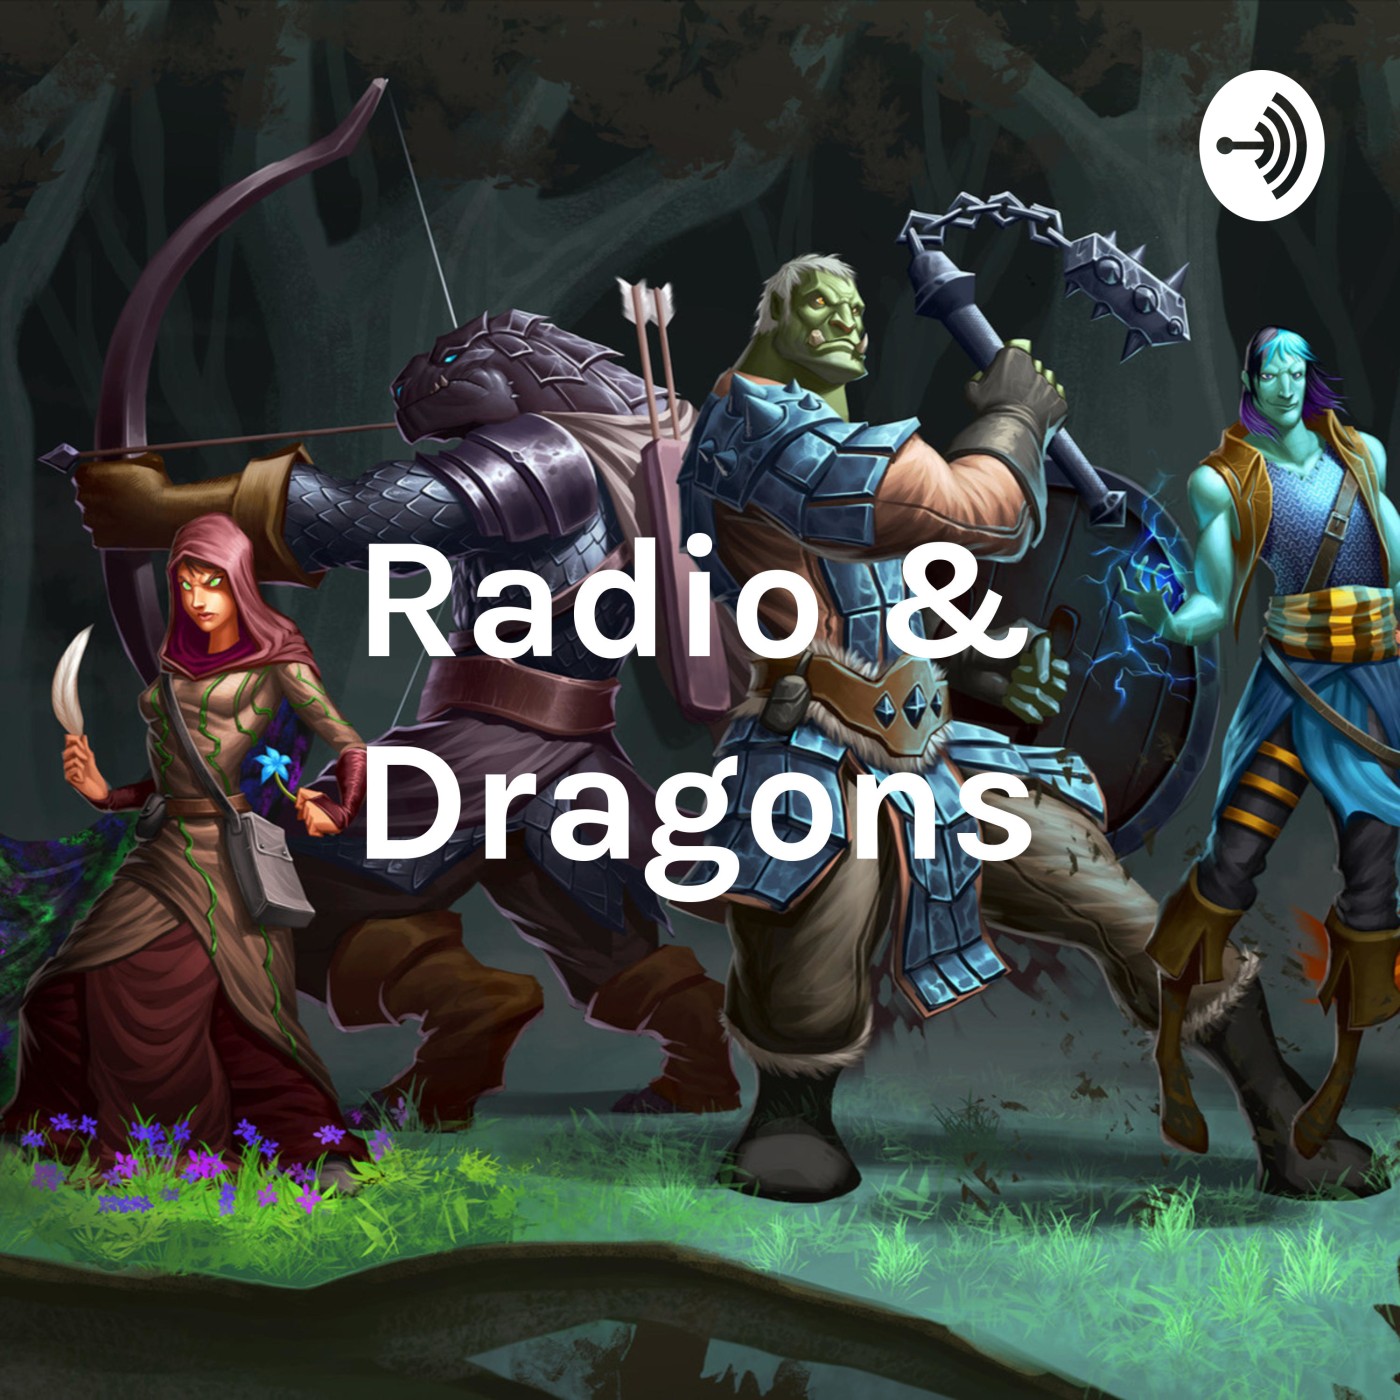 Radio&Dragons: Session 0 et vers de terre